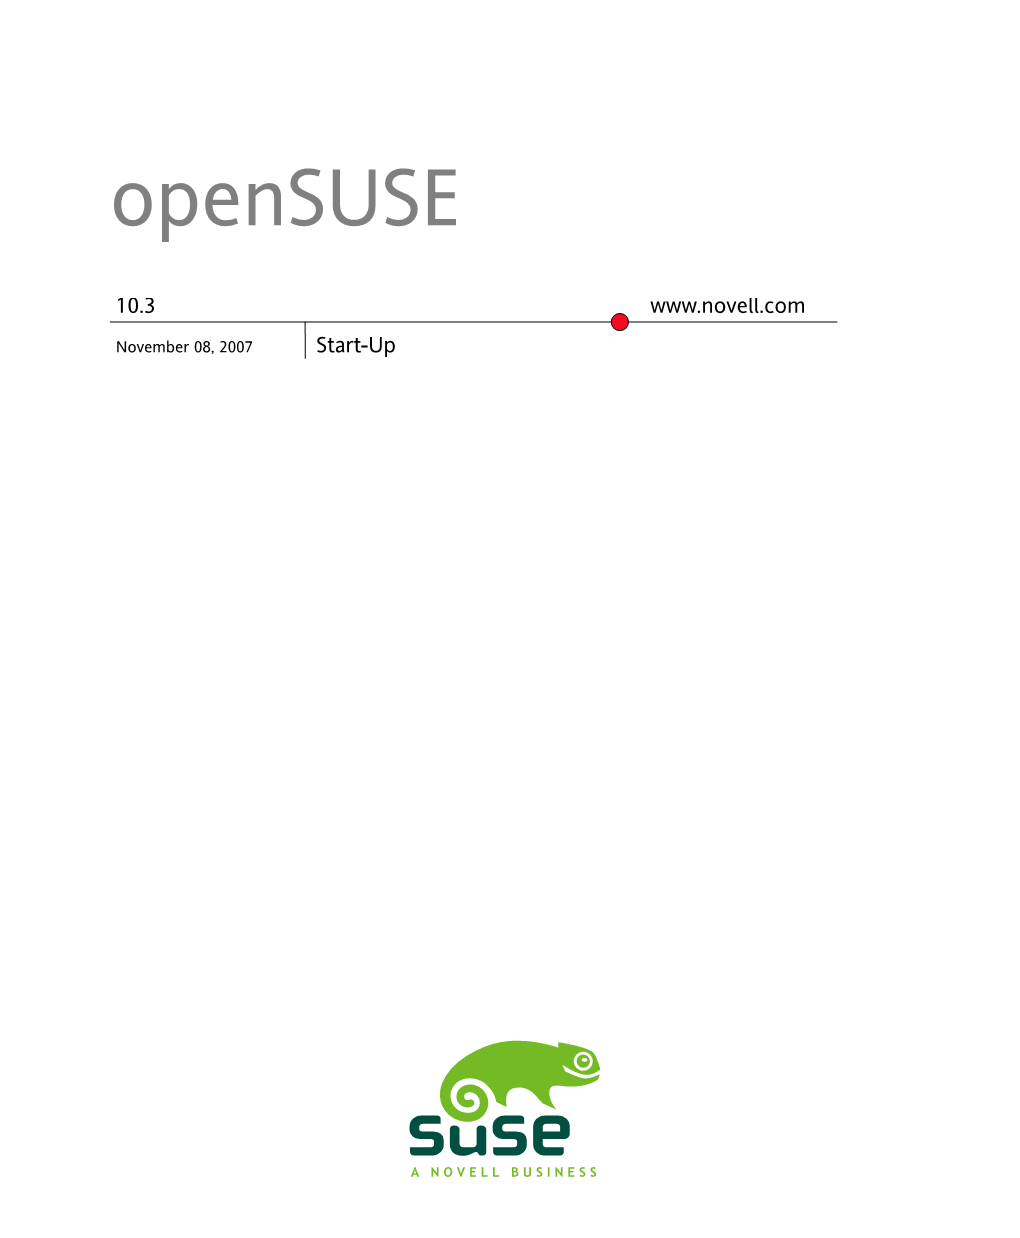 Opensuse Documentation